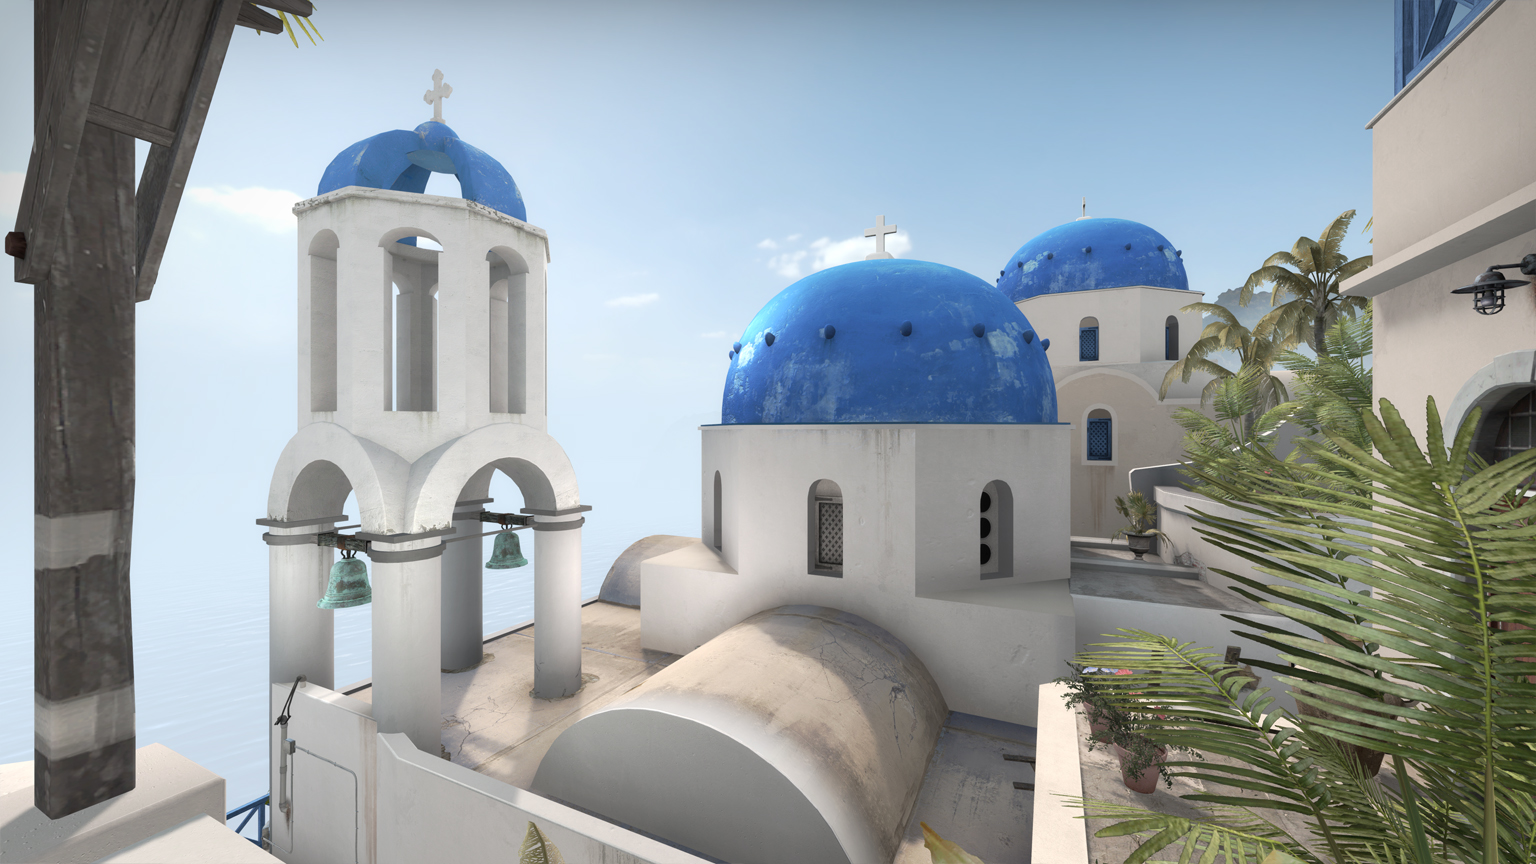 Counter-Strike: Global Offensive sắp có map mới - De_Santorini ?